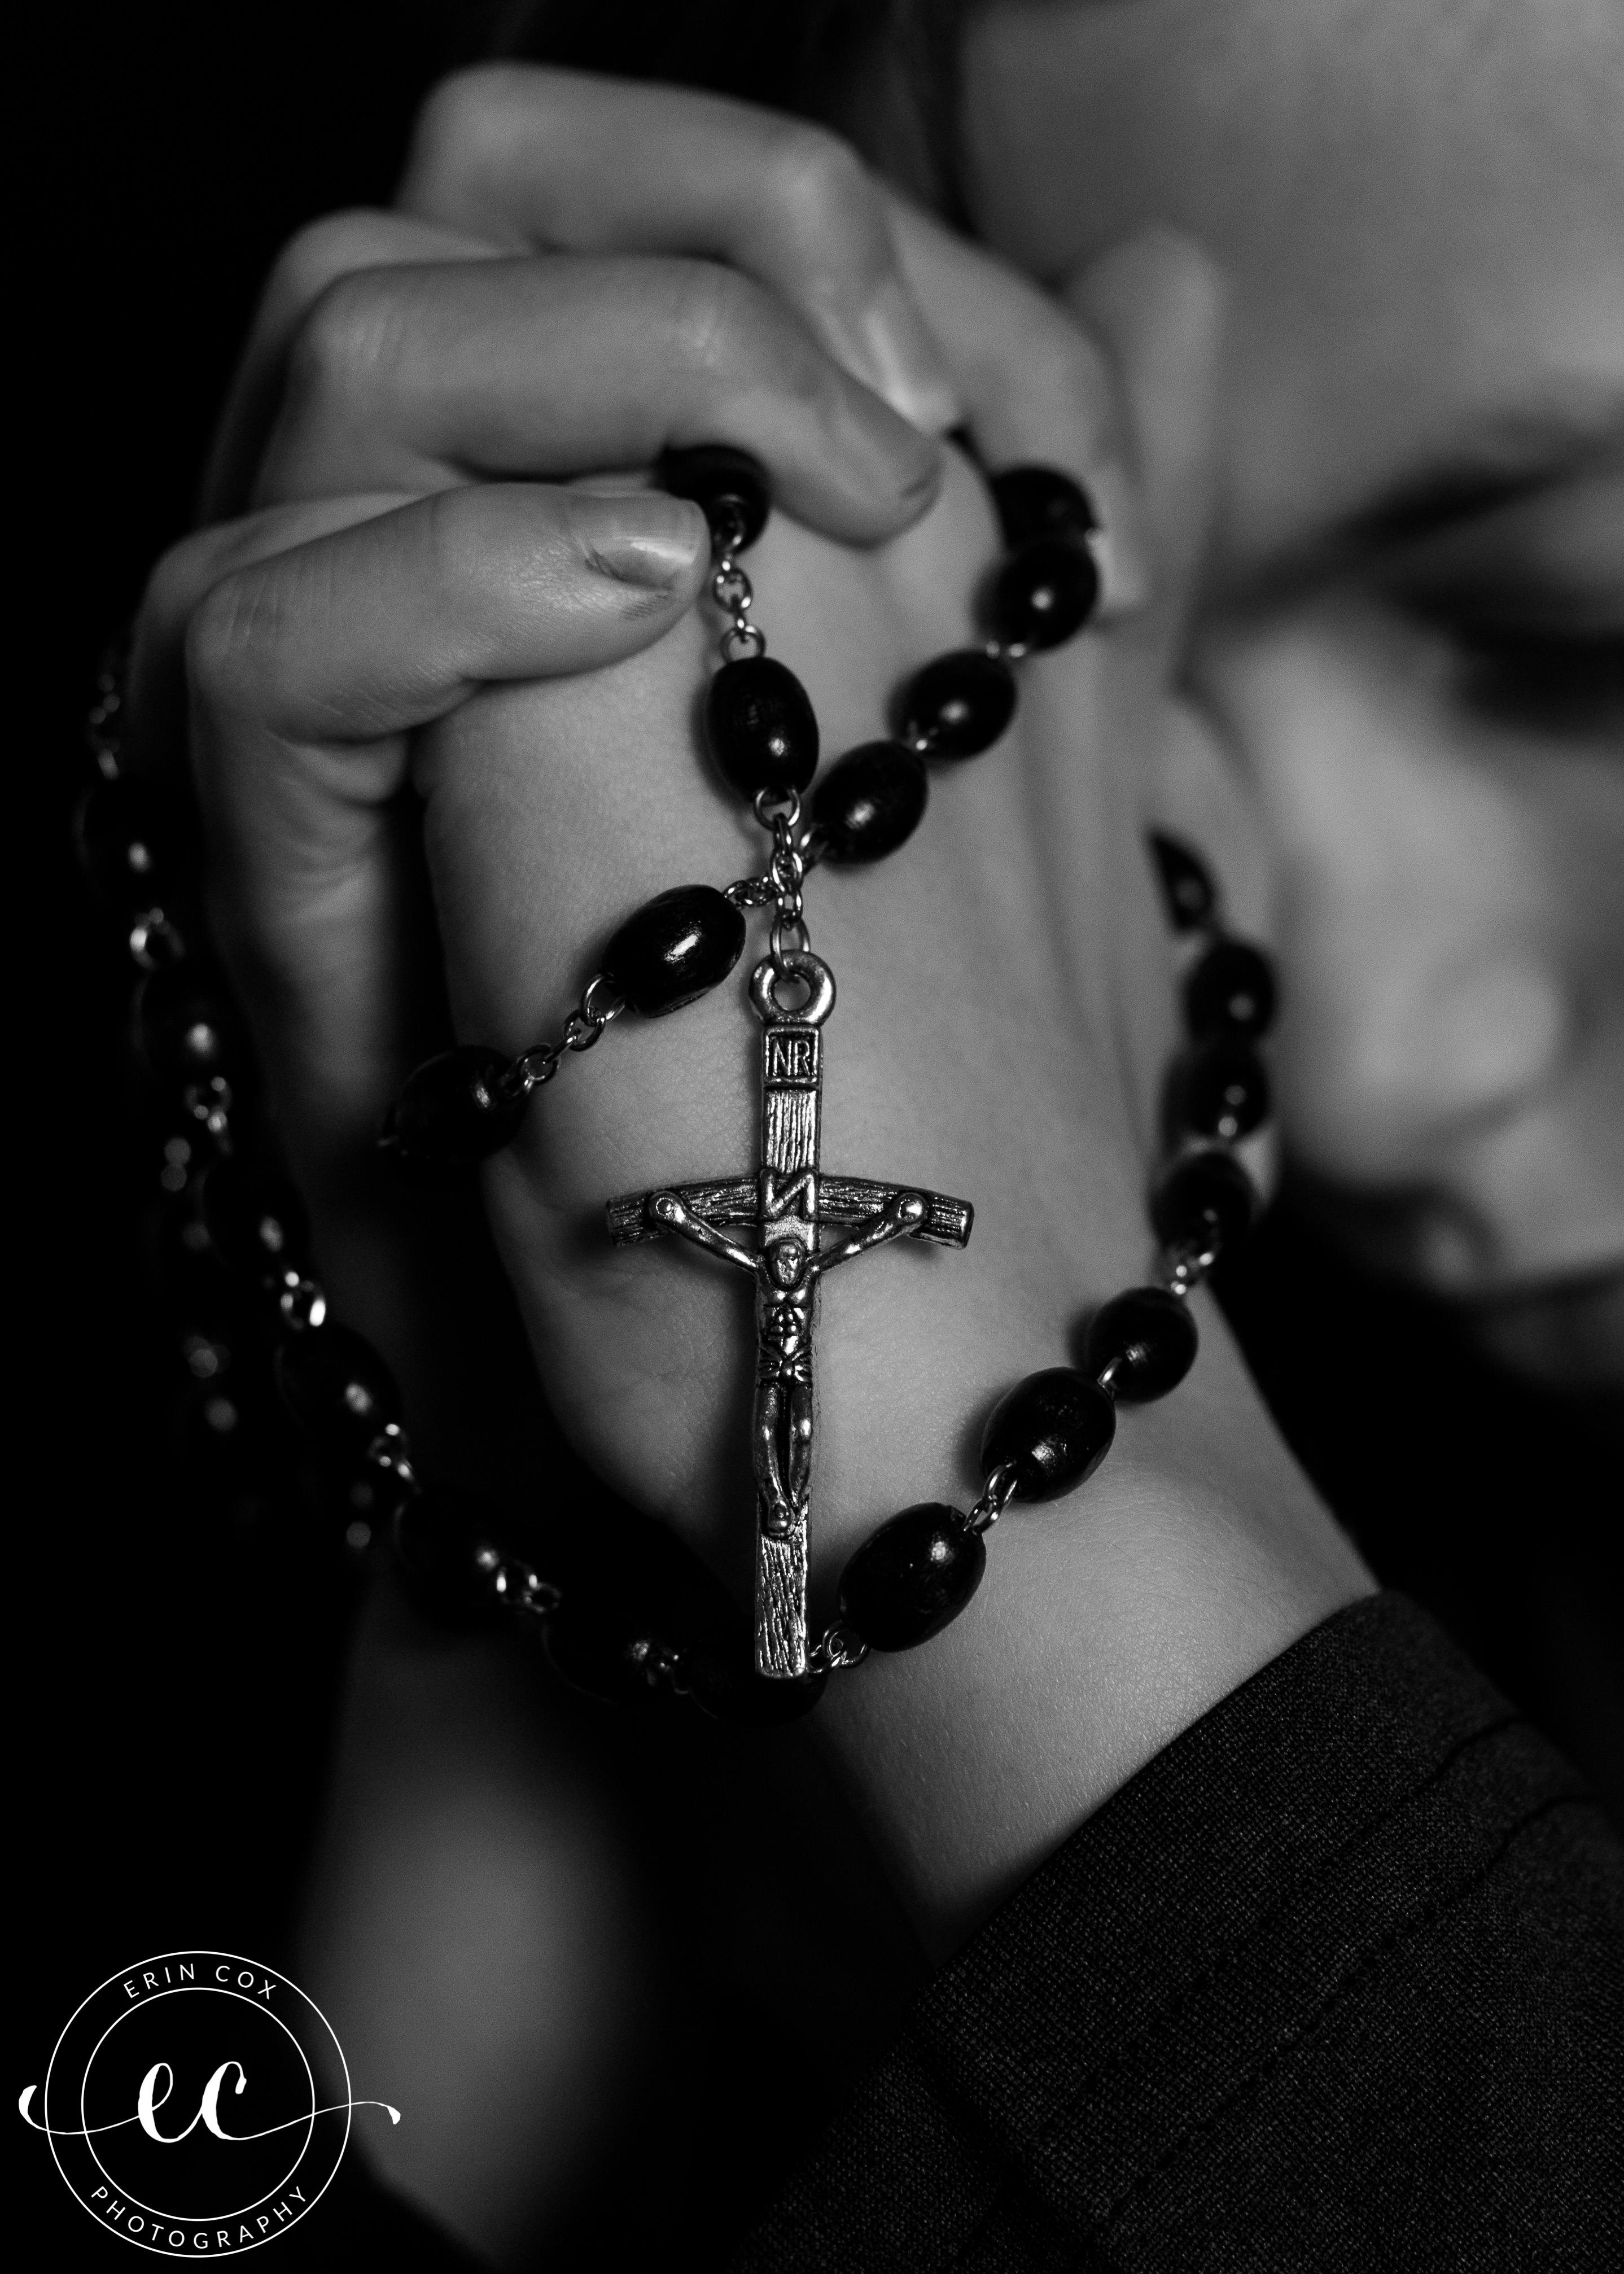 praying rosary hands